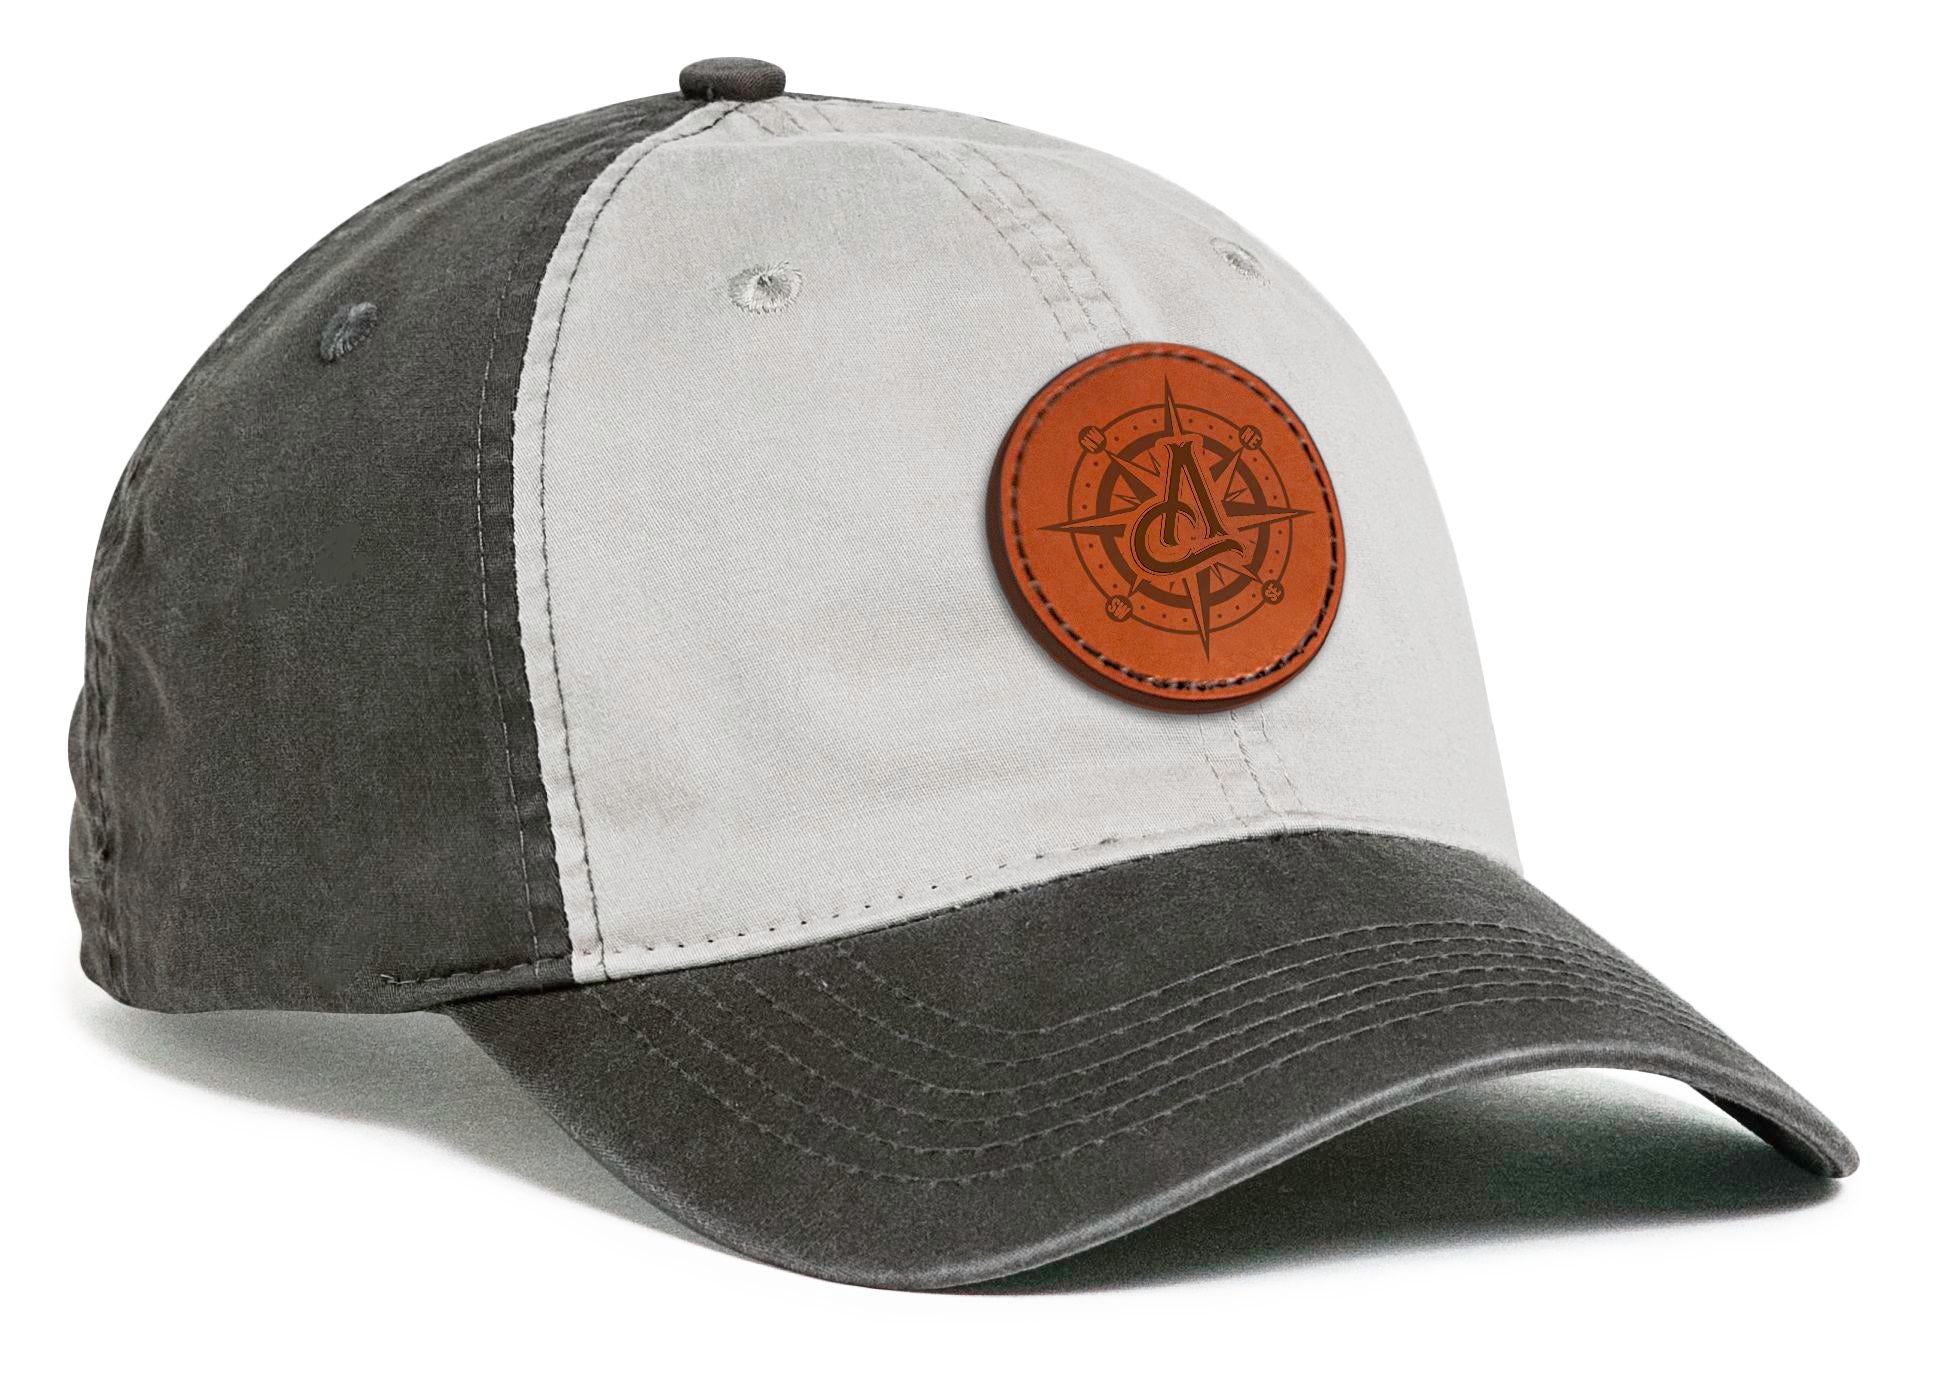 Apparel Catalog Adjustable Hats